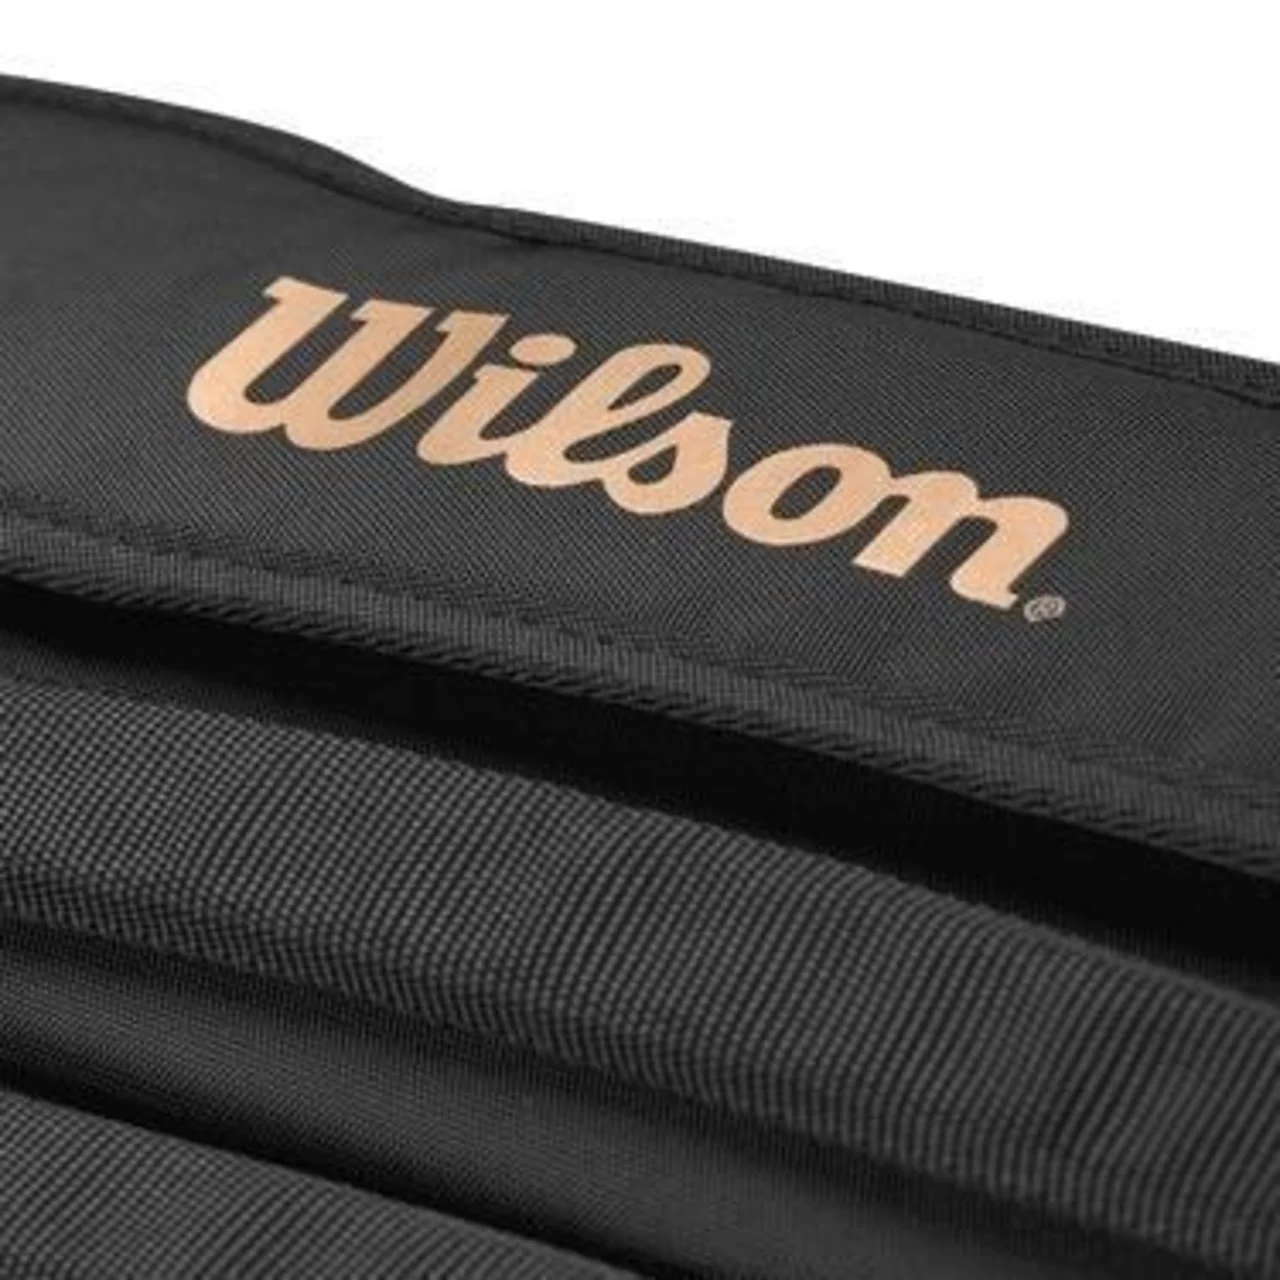 Wilson Super Tour Pro Staff V14 9PK Racket Bag 2023